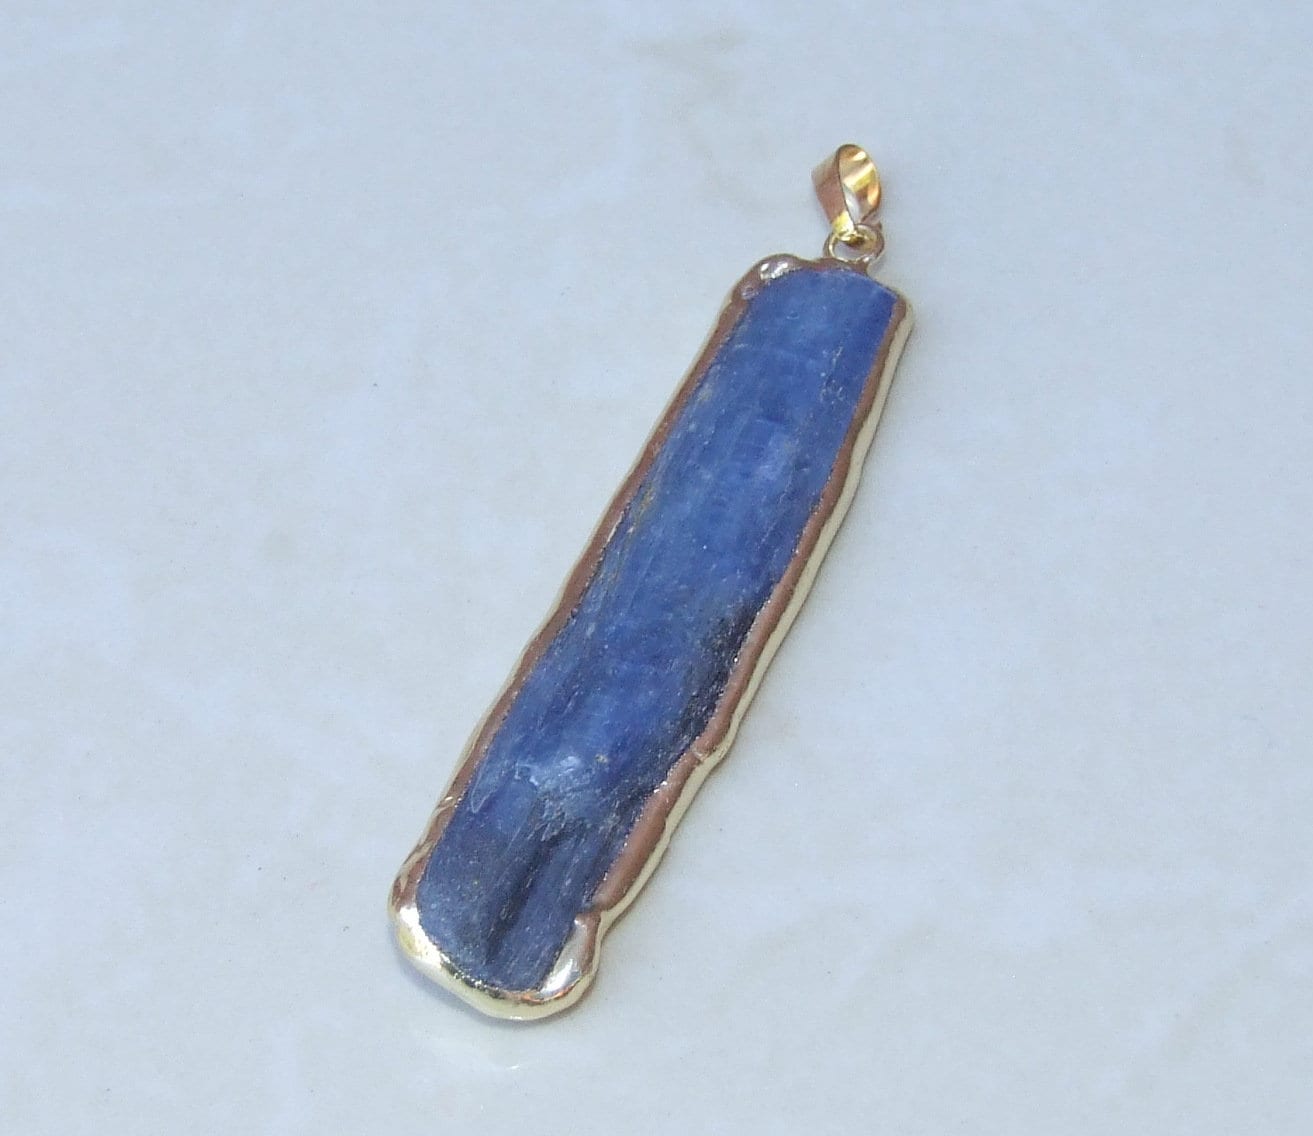 Large Blue Kyanite Pendant, Gemstone Pendant, Gold Edge, Raw Natural Kyanite, Kyanite Slice Pendant, Kyanite Beads, 15-20mm x 60-70mm